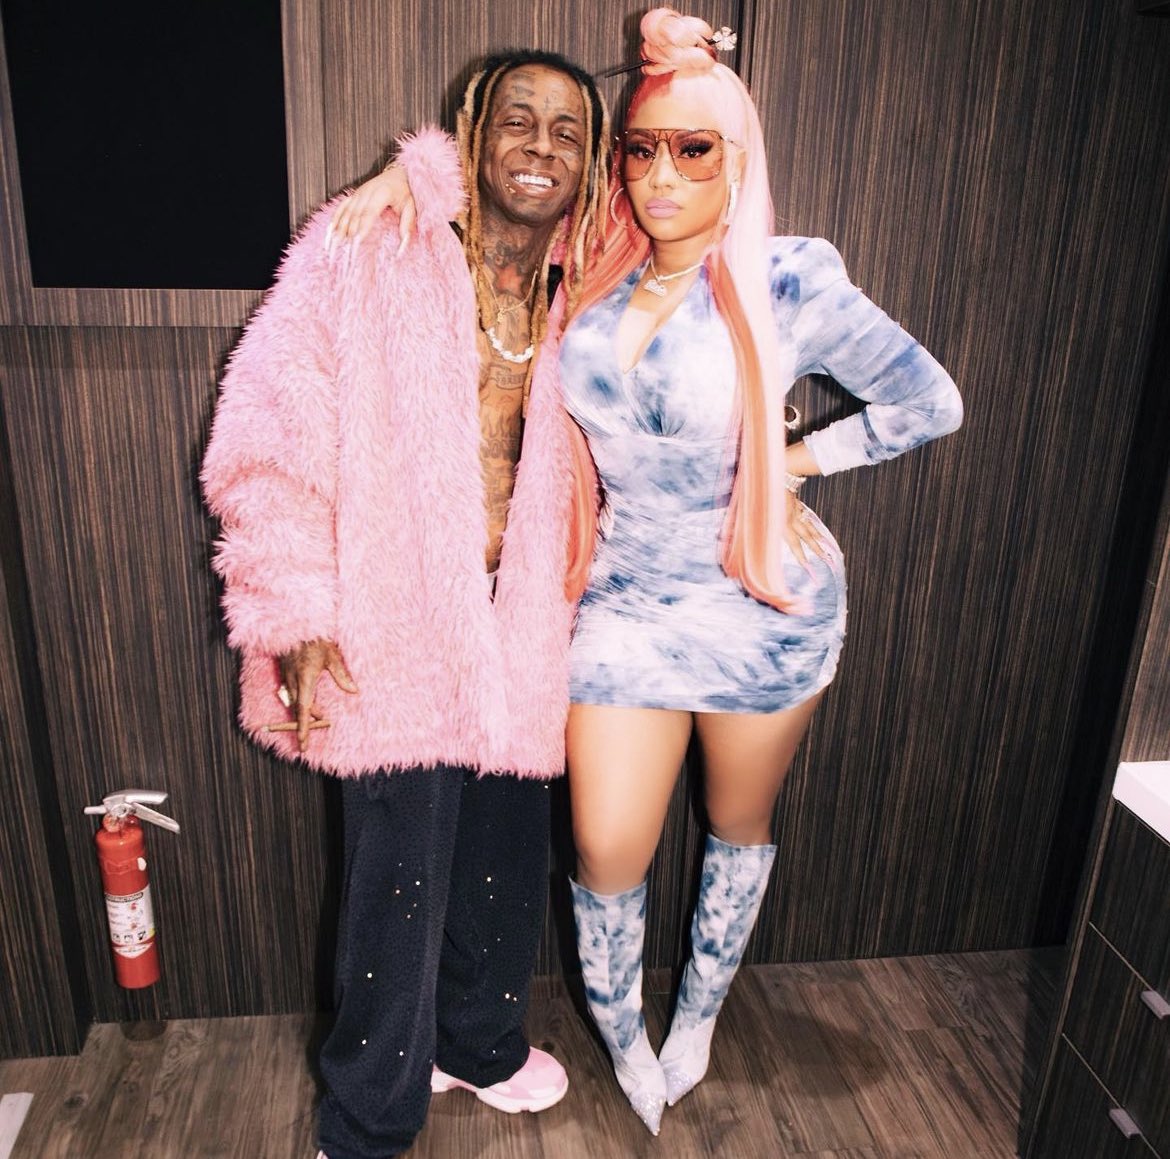 Nicki Minaj Joins Lil Wayne At Rolling Loud, Along With 2 Chainz & Gudda Gudda 25